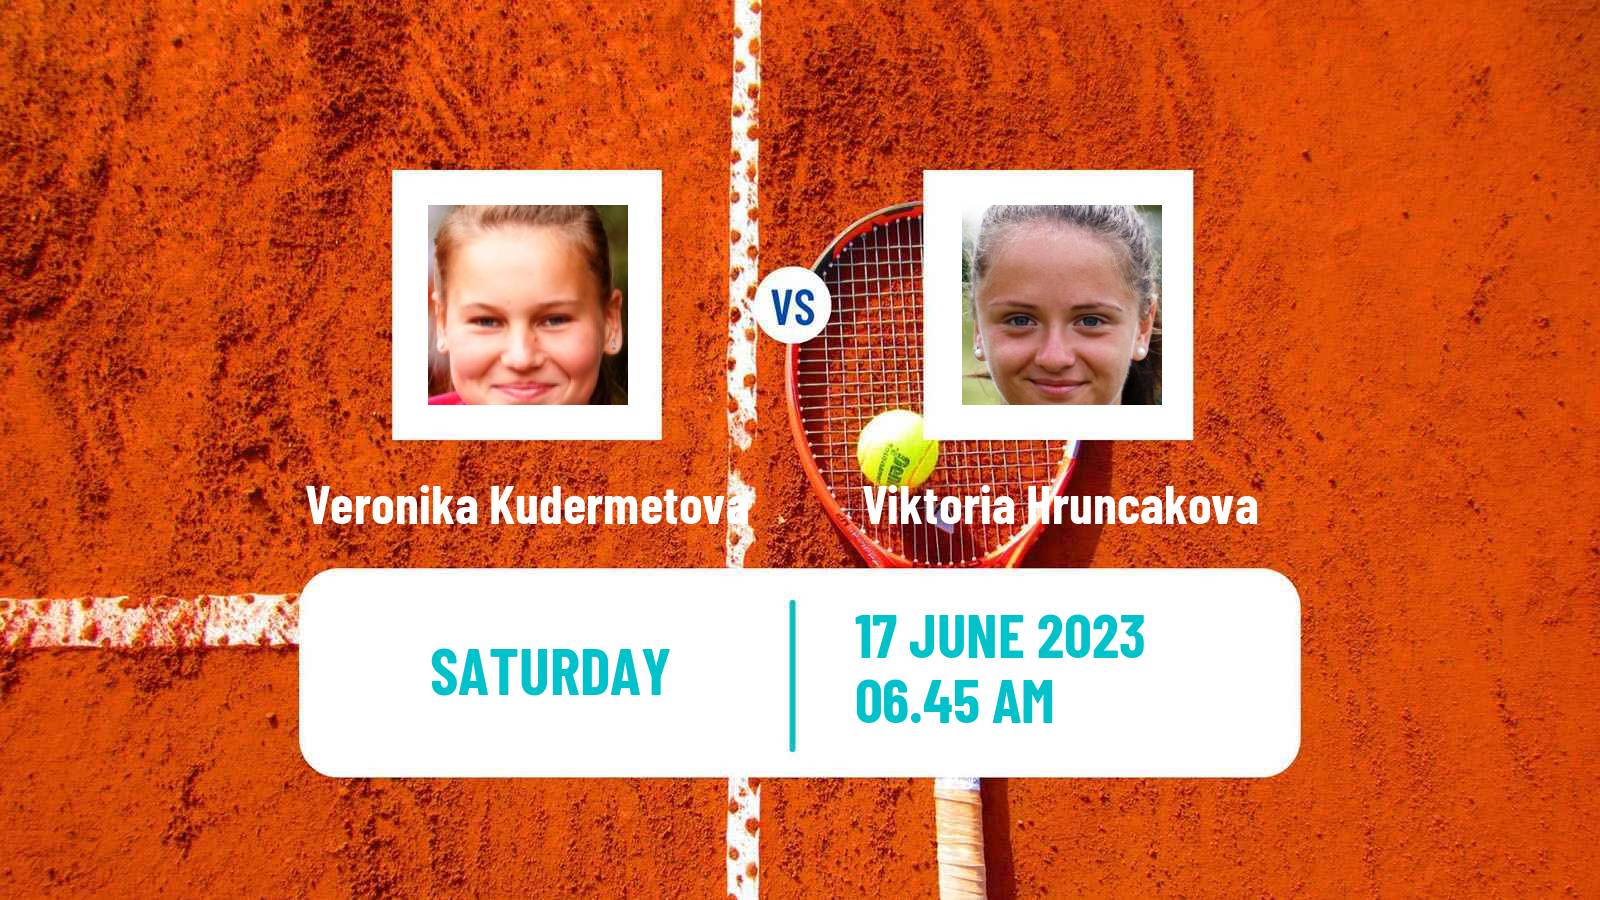 Tennis WTA Hertogenbosch Veronika Kudermetova - Viktoria Hruncakova